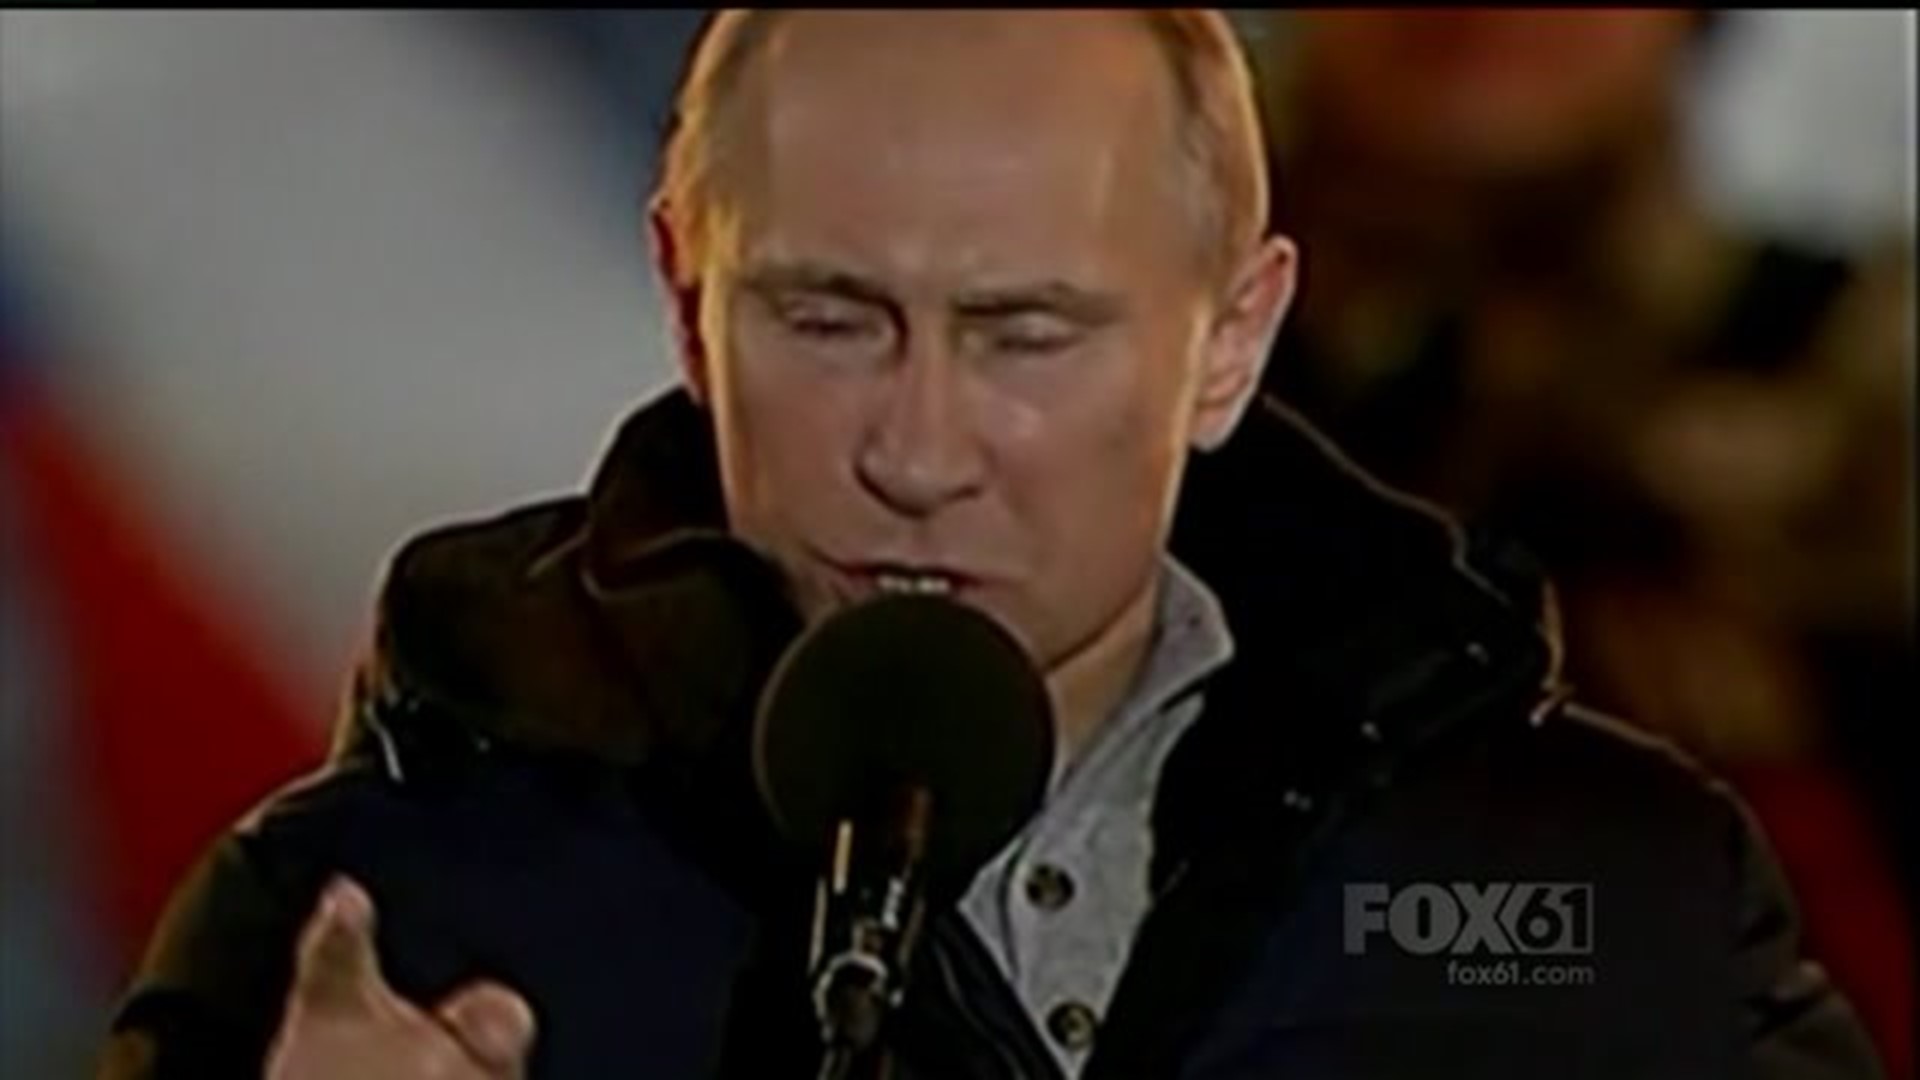 A Russian affairs expert on Vladimir Putin